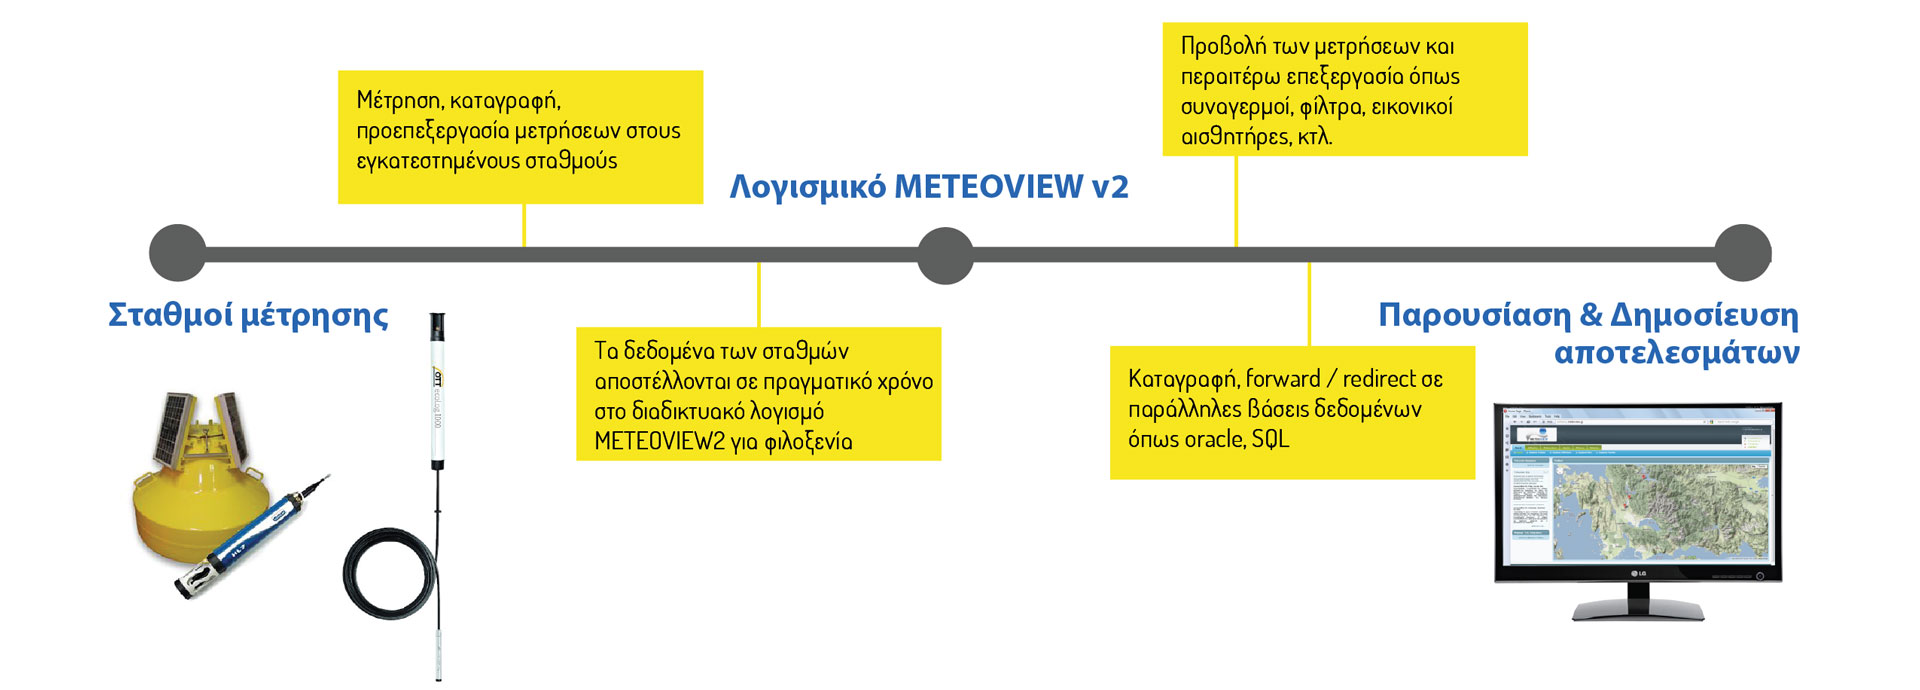 Meteoview2